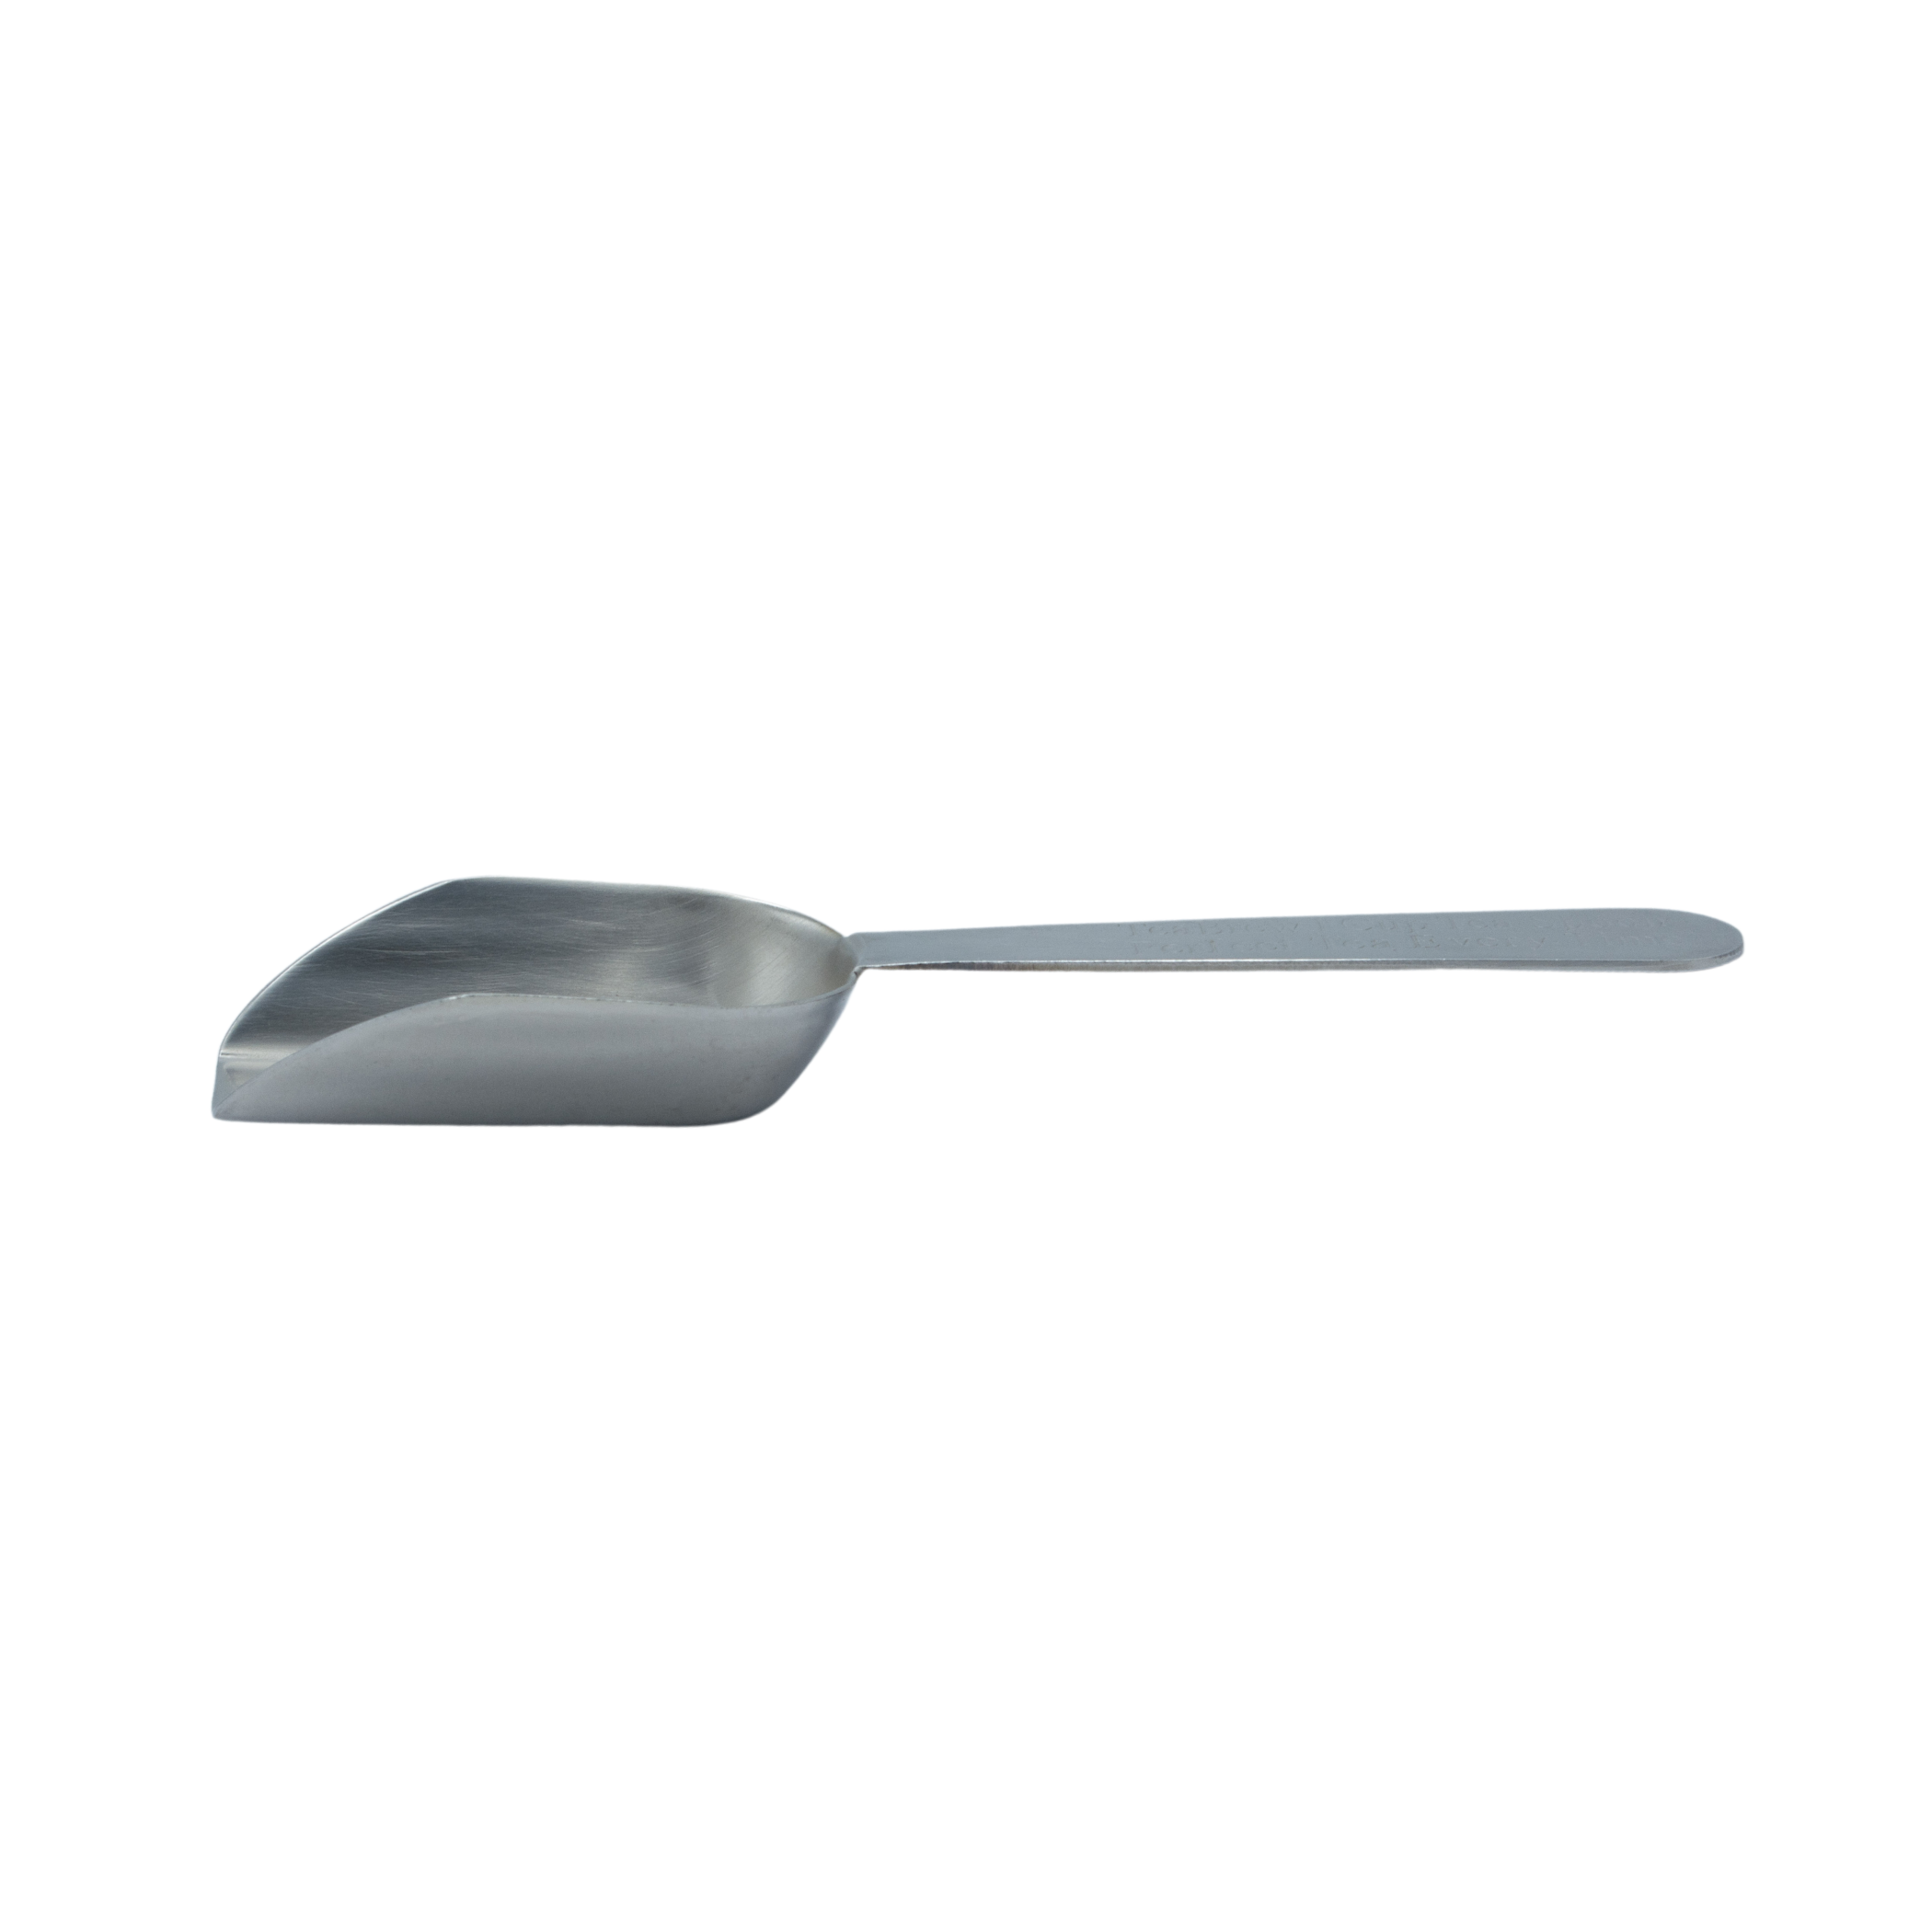 Perfect Tea Spoon - Angled